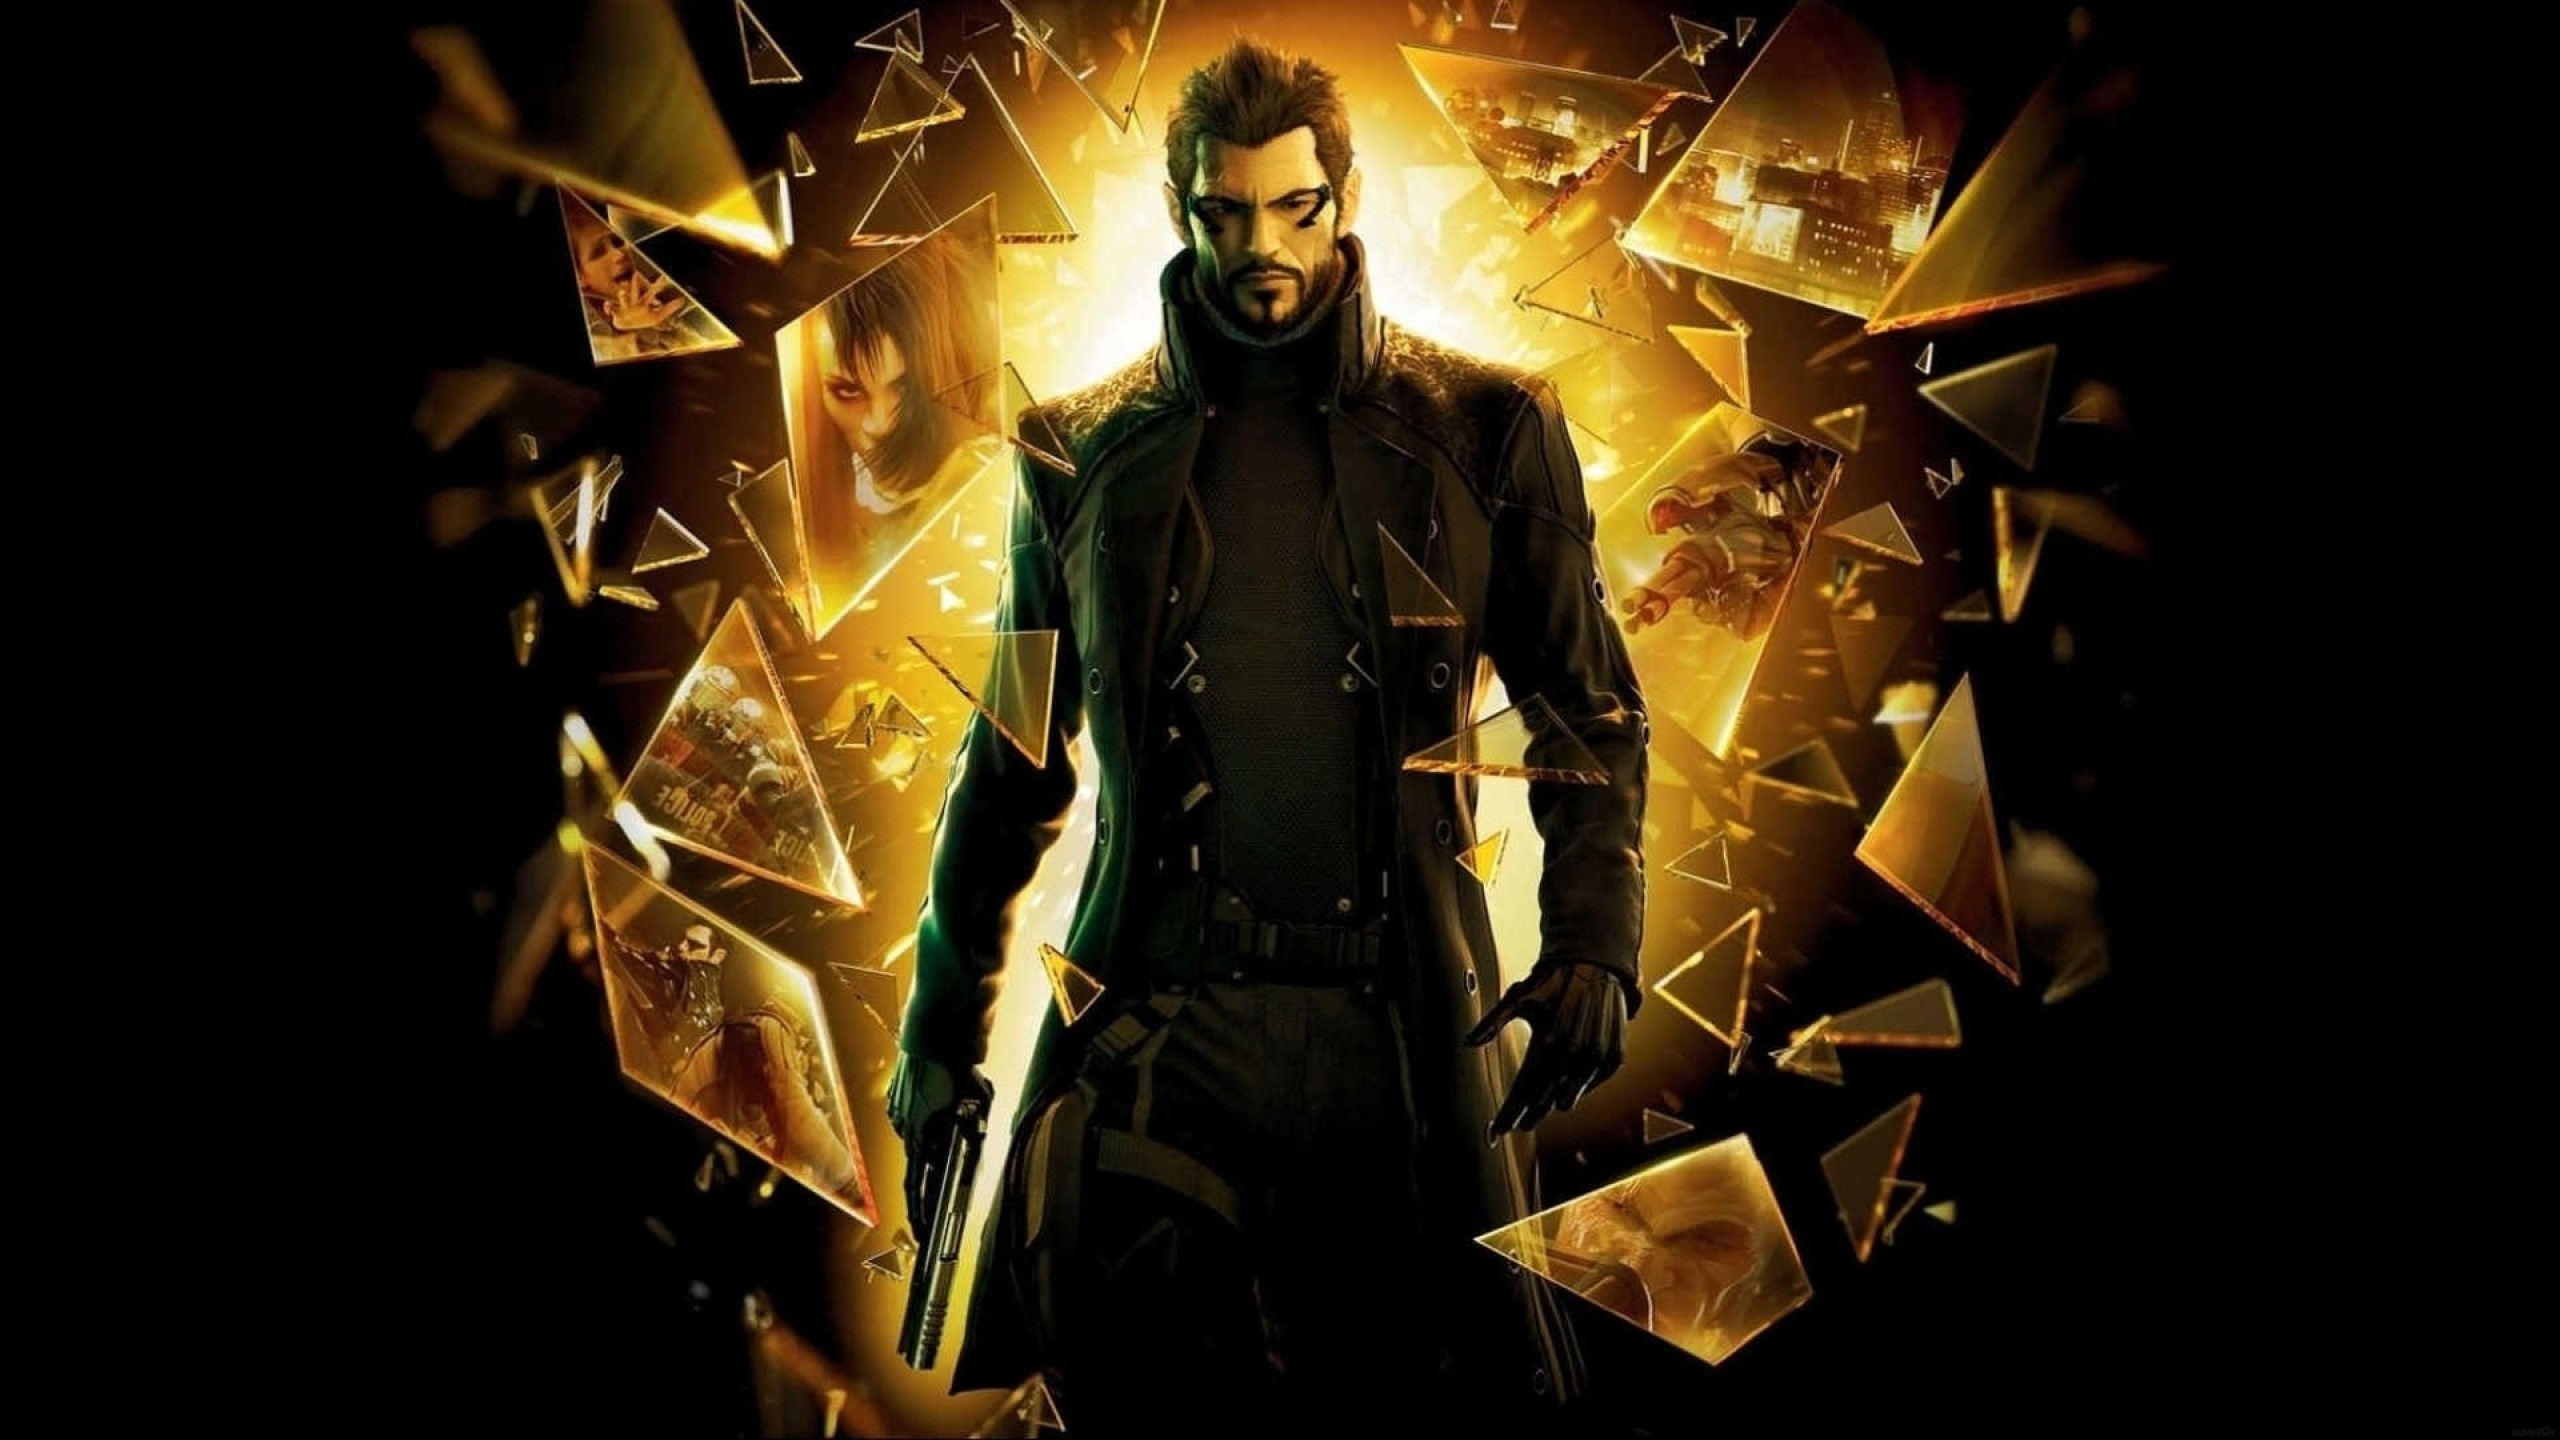 Adorable Deus Ex Human Revolution Image & Wallpaper Ex Render